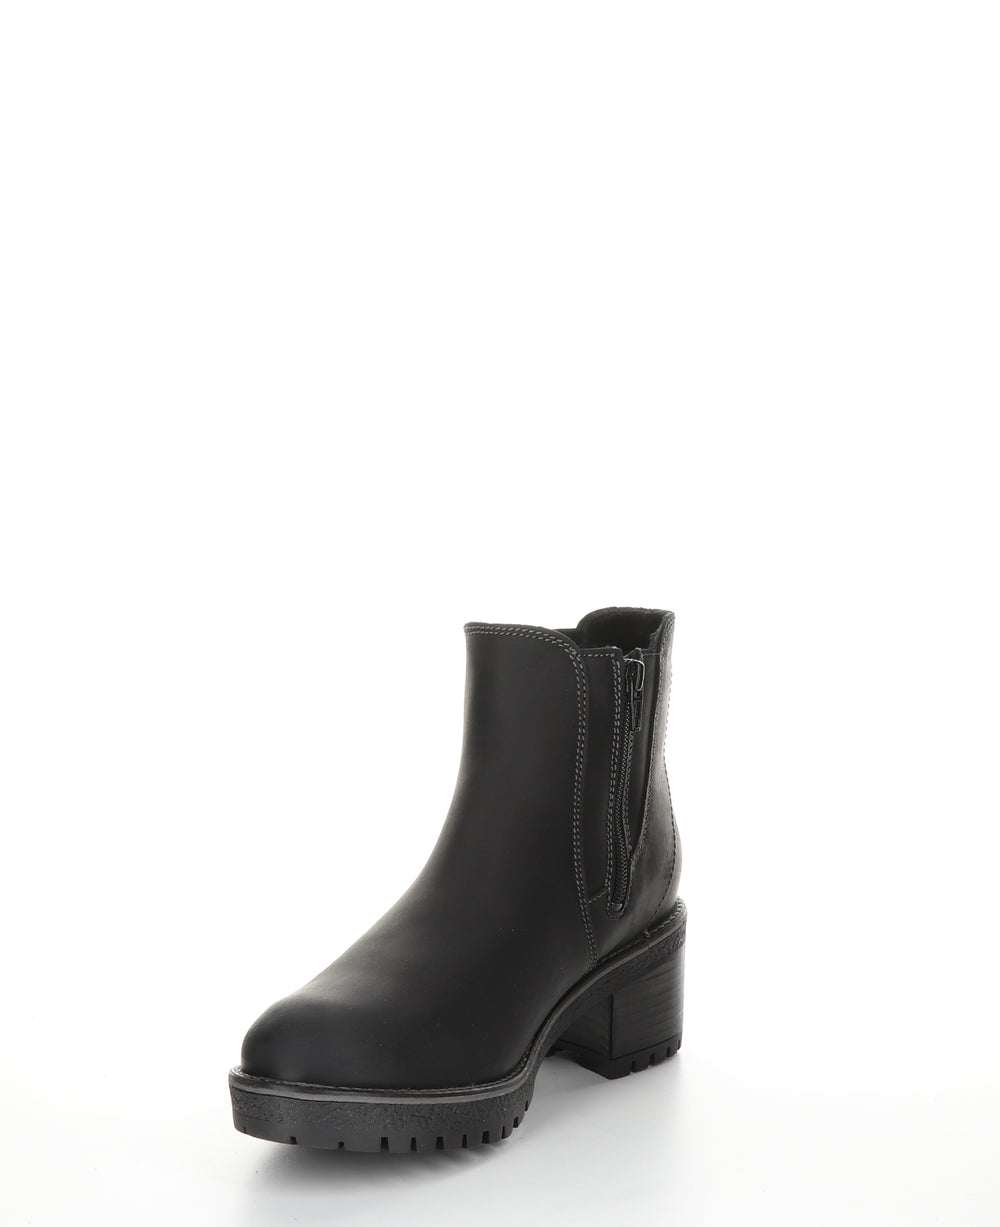 MASS Black Zip Up Ankle Boots|MASS Bottines avec Fermeture Zippée in Noir